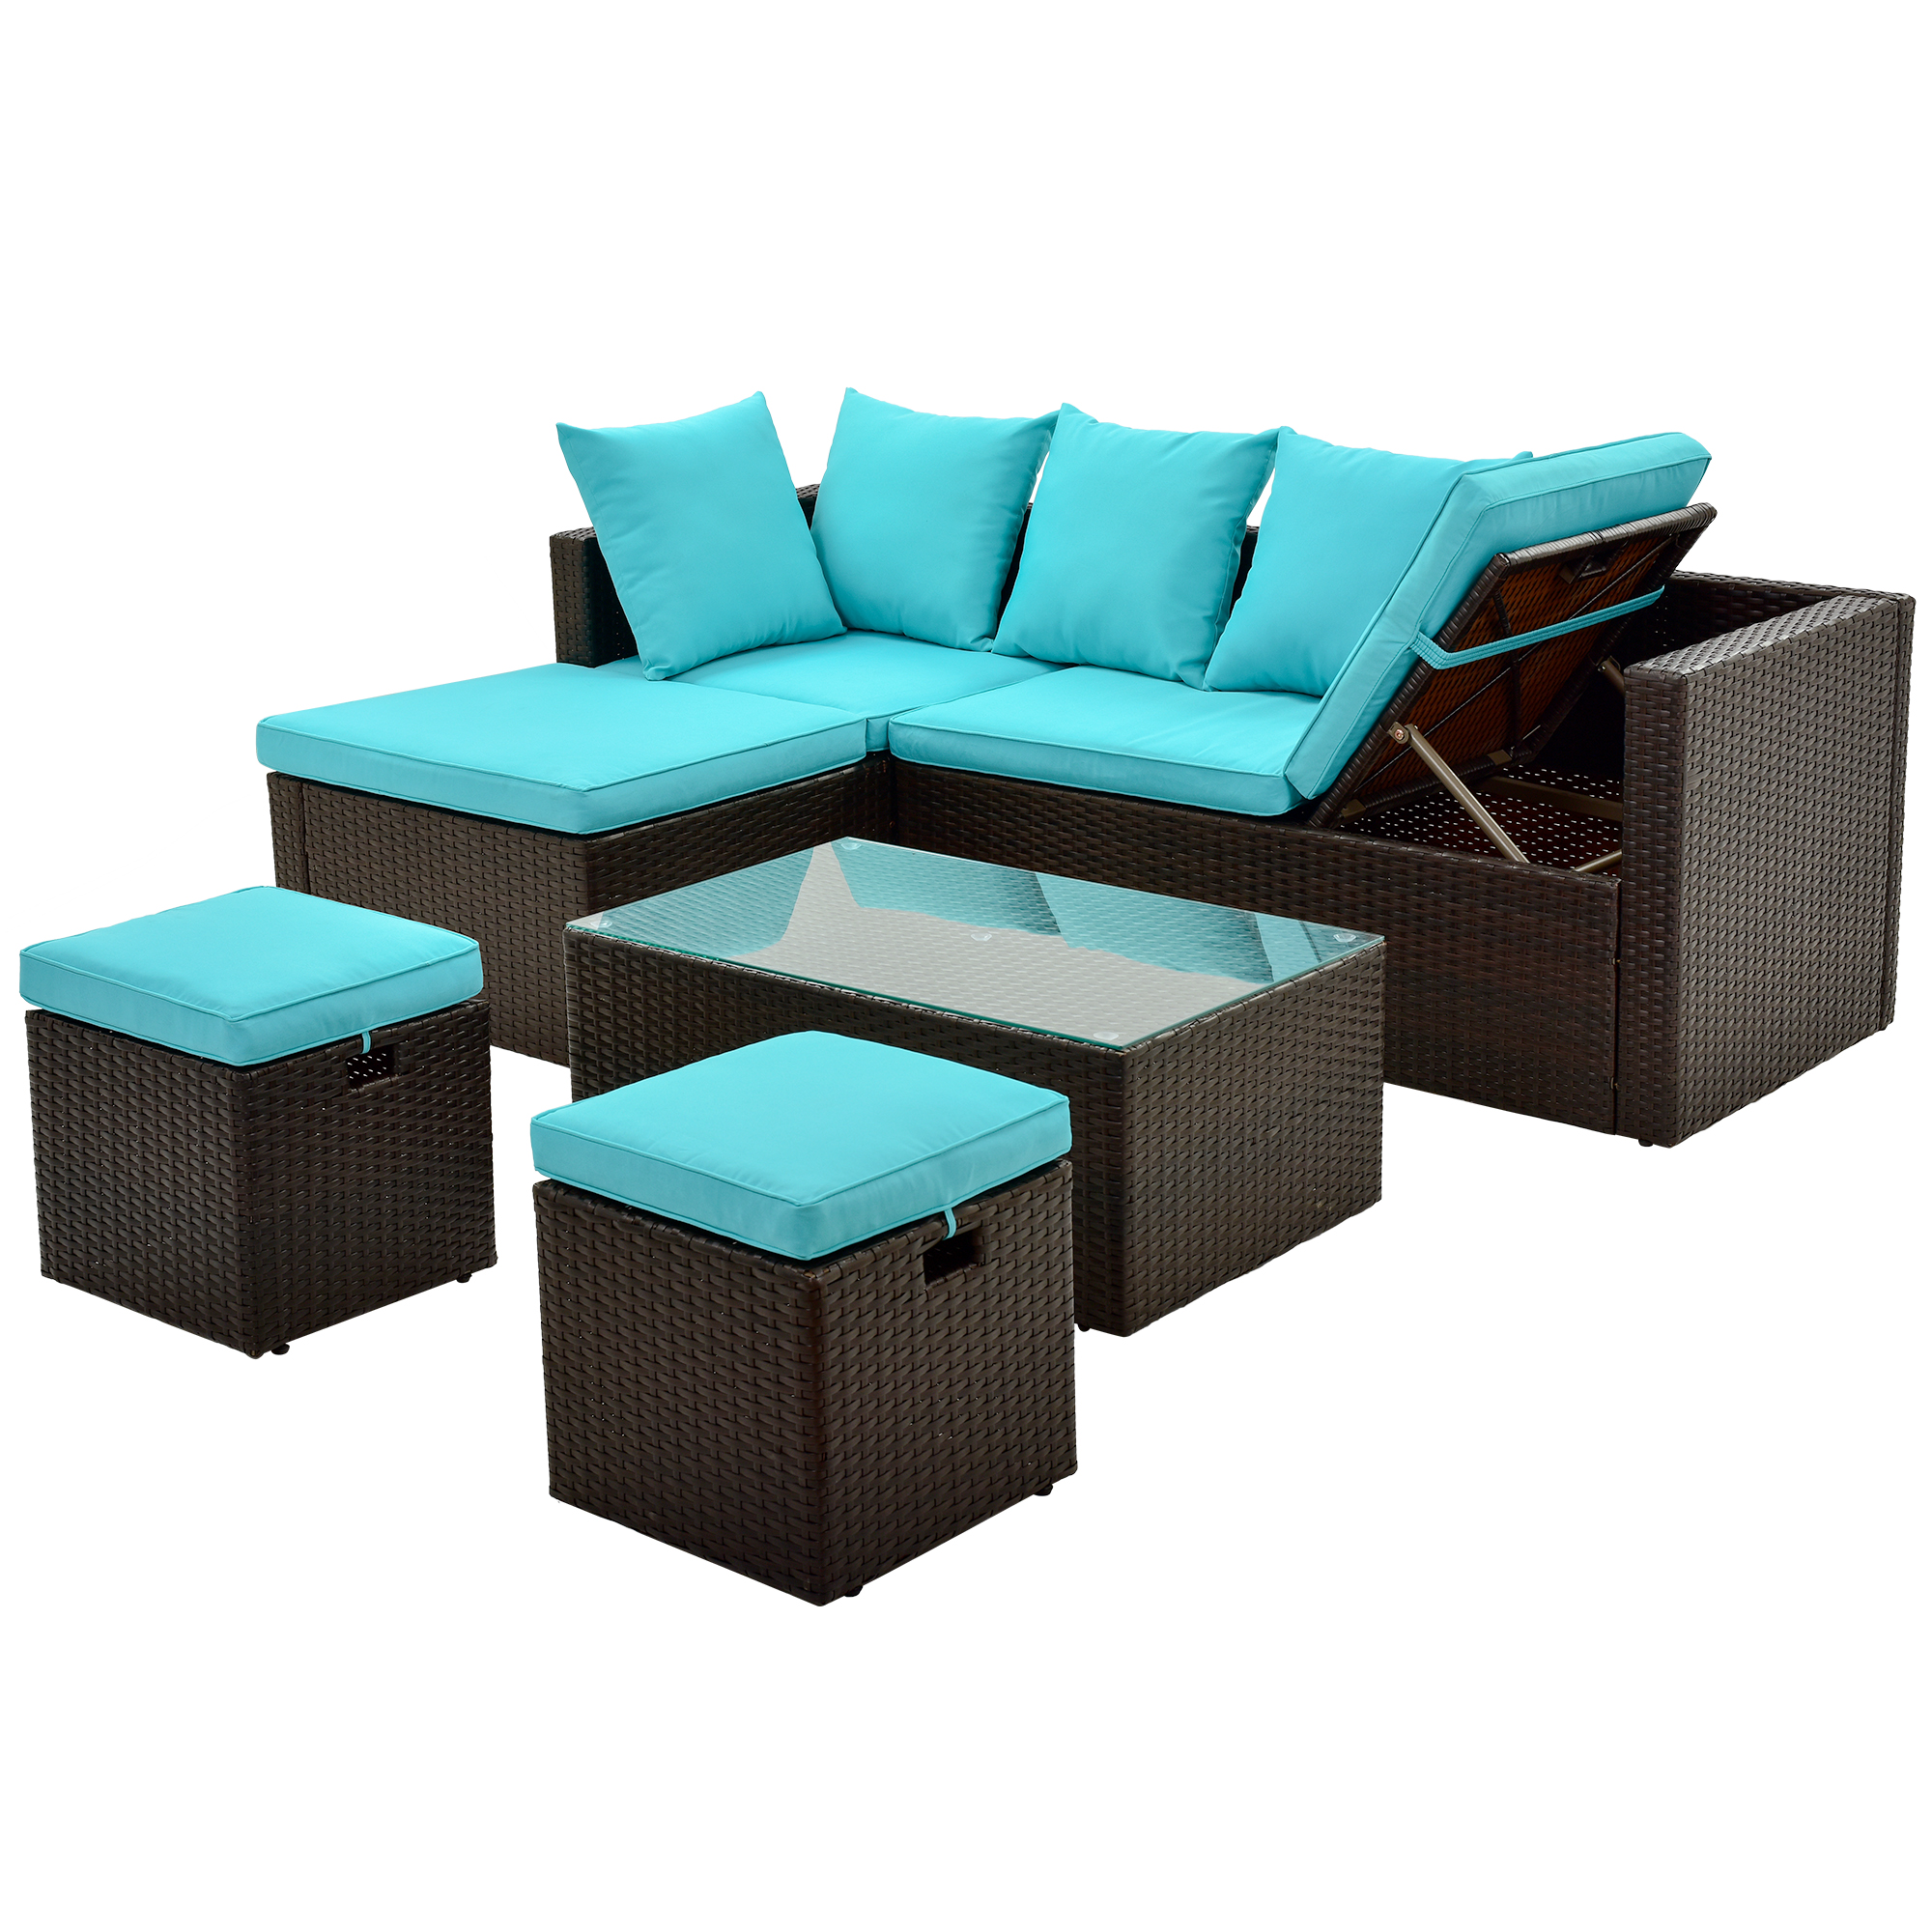 Casainc 5-Piece Brown Wicker Outdoor Sectional Set with Blue Cushions-CASAINC